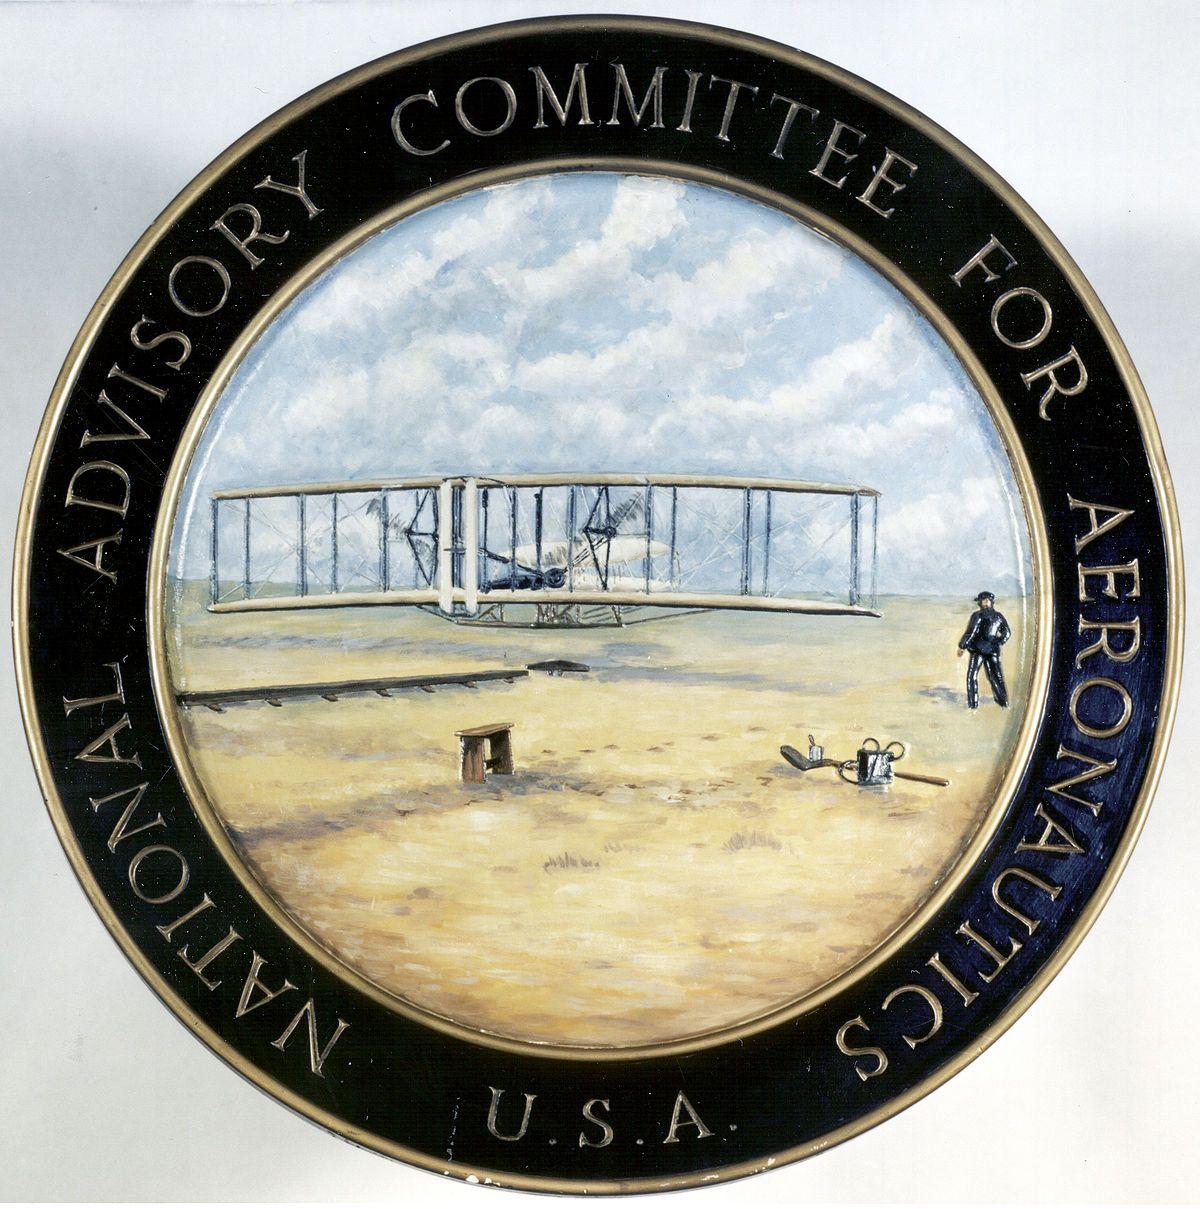 Aeronautics NACA Logo - National Advisory Committee for Aeronautics